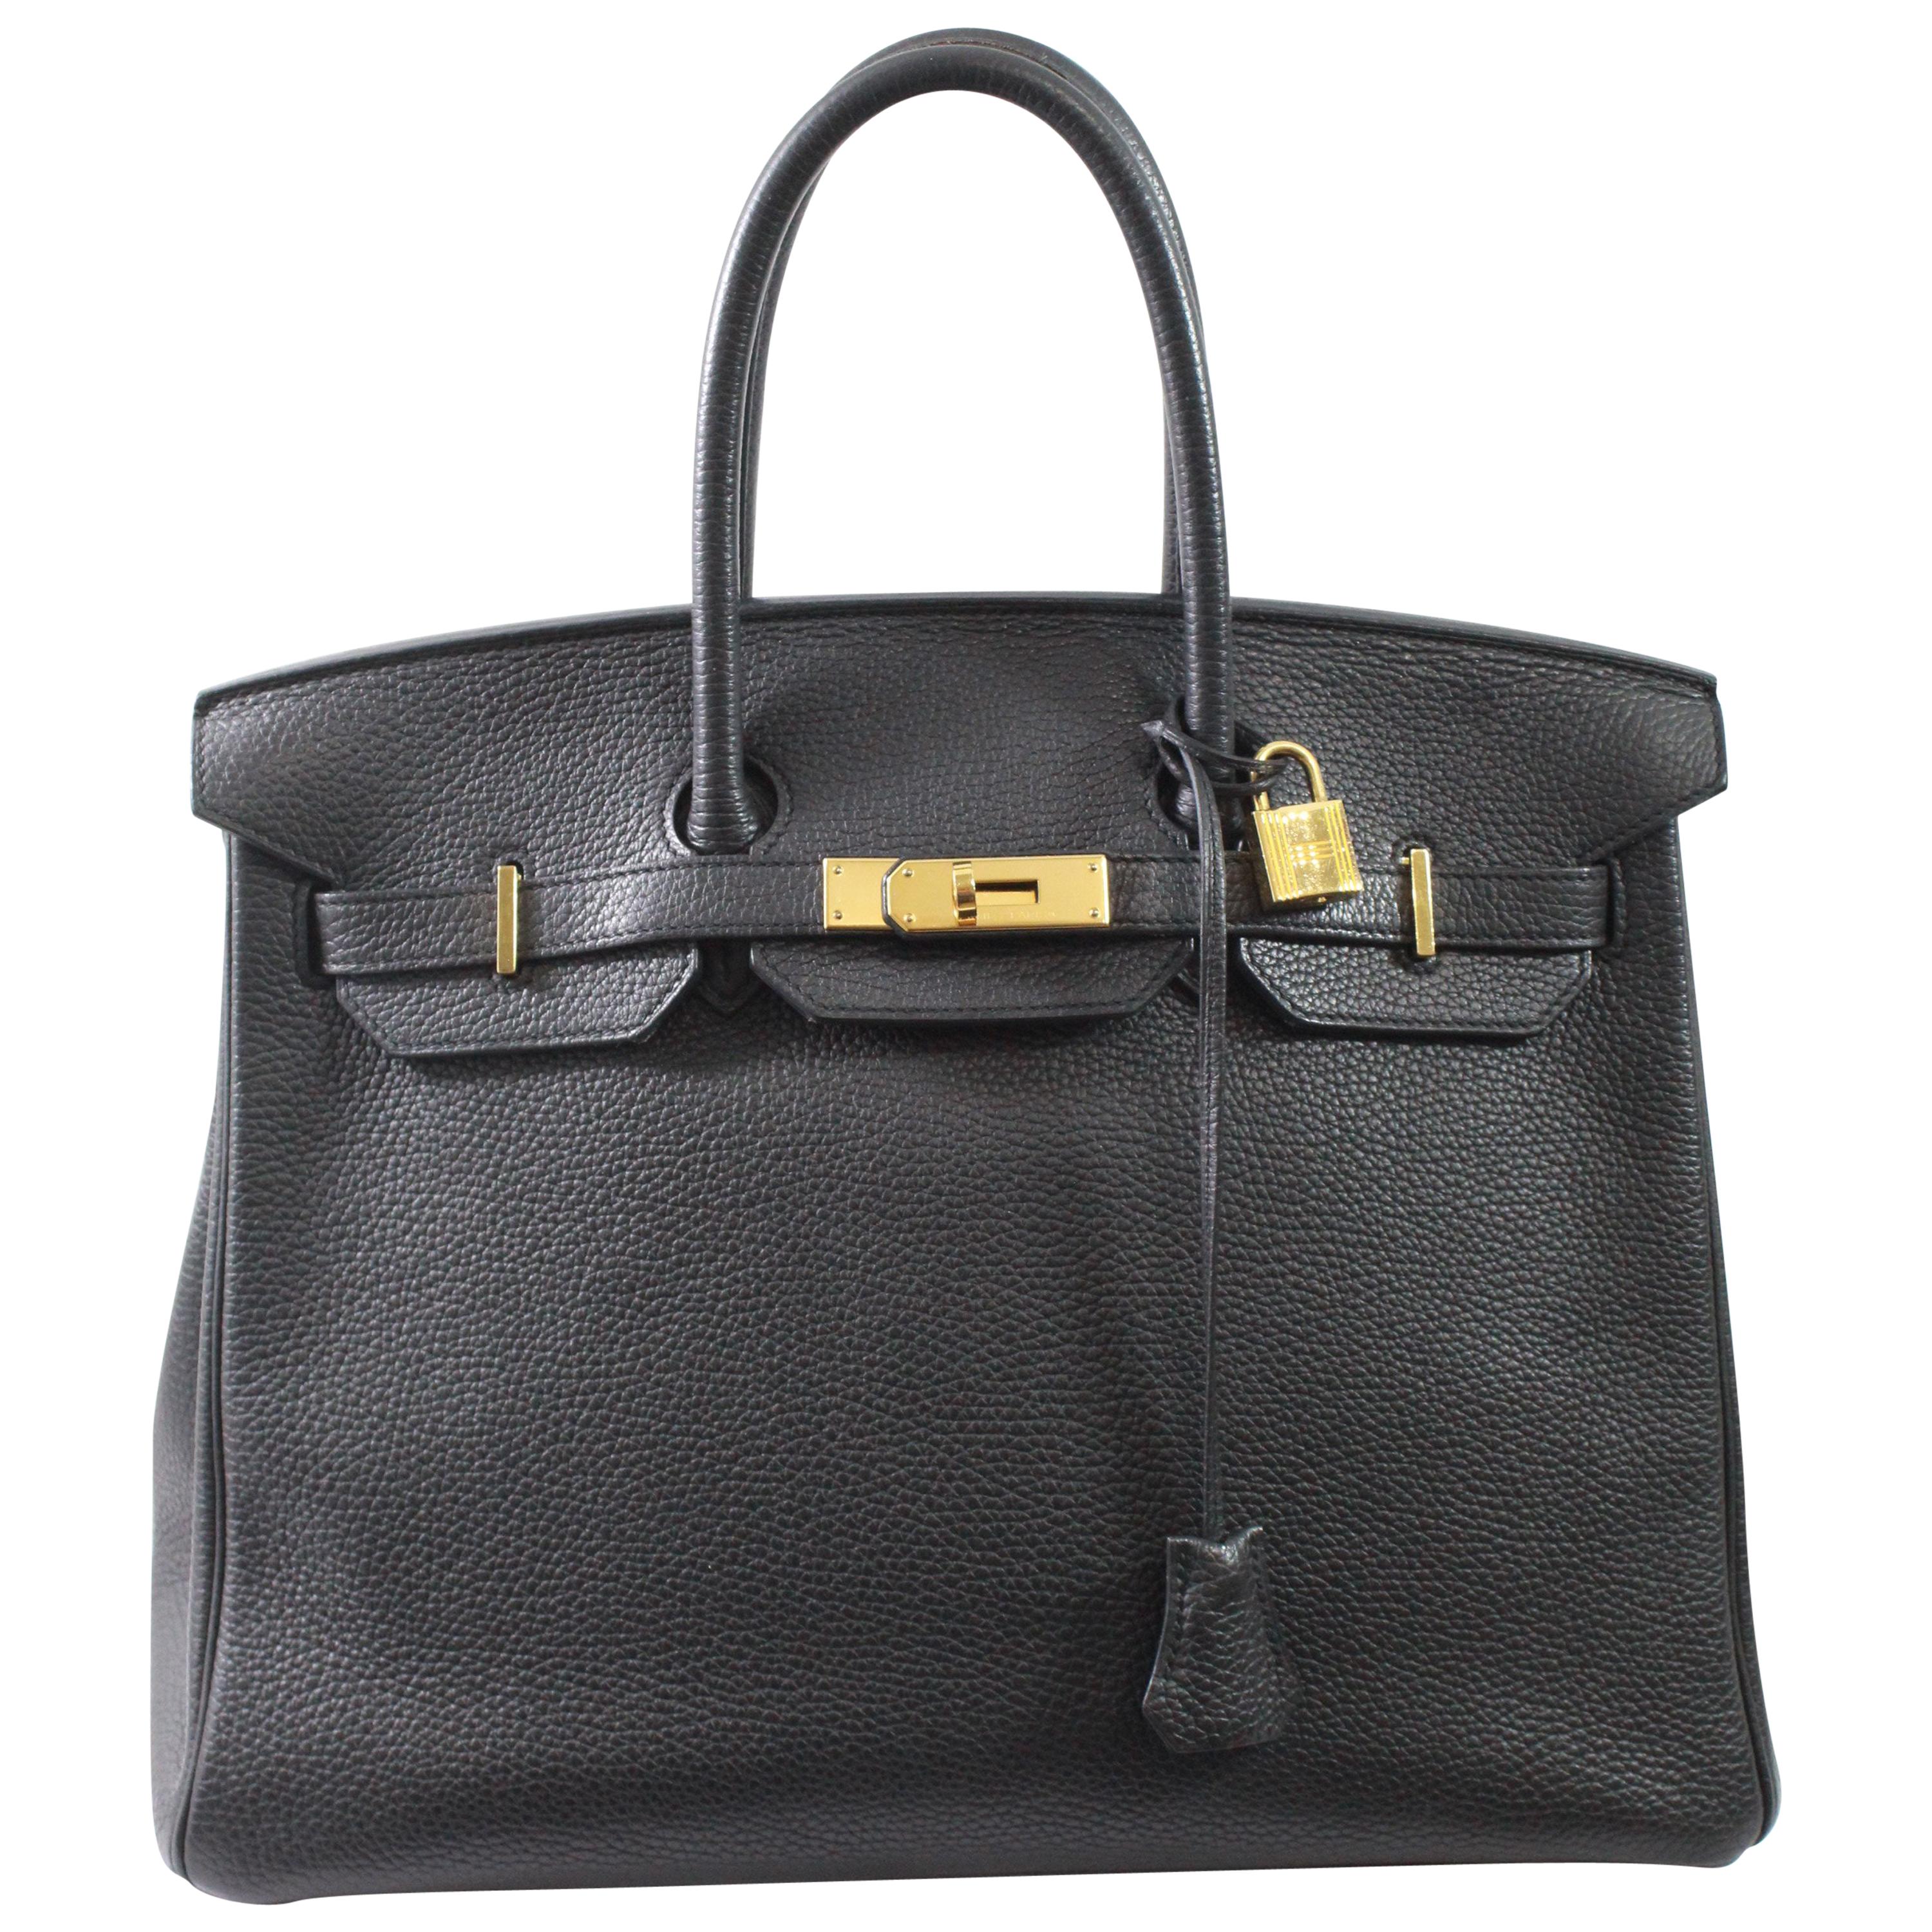 Birkin Hermes 35 in Black / Grey Graphite Leather and Golden Hardware